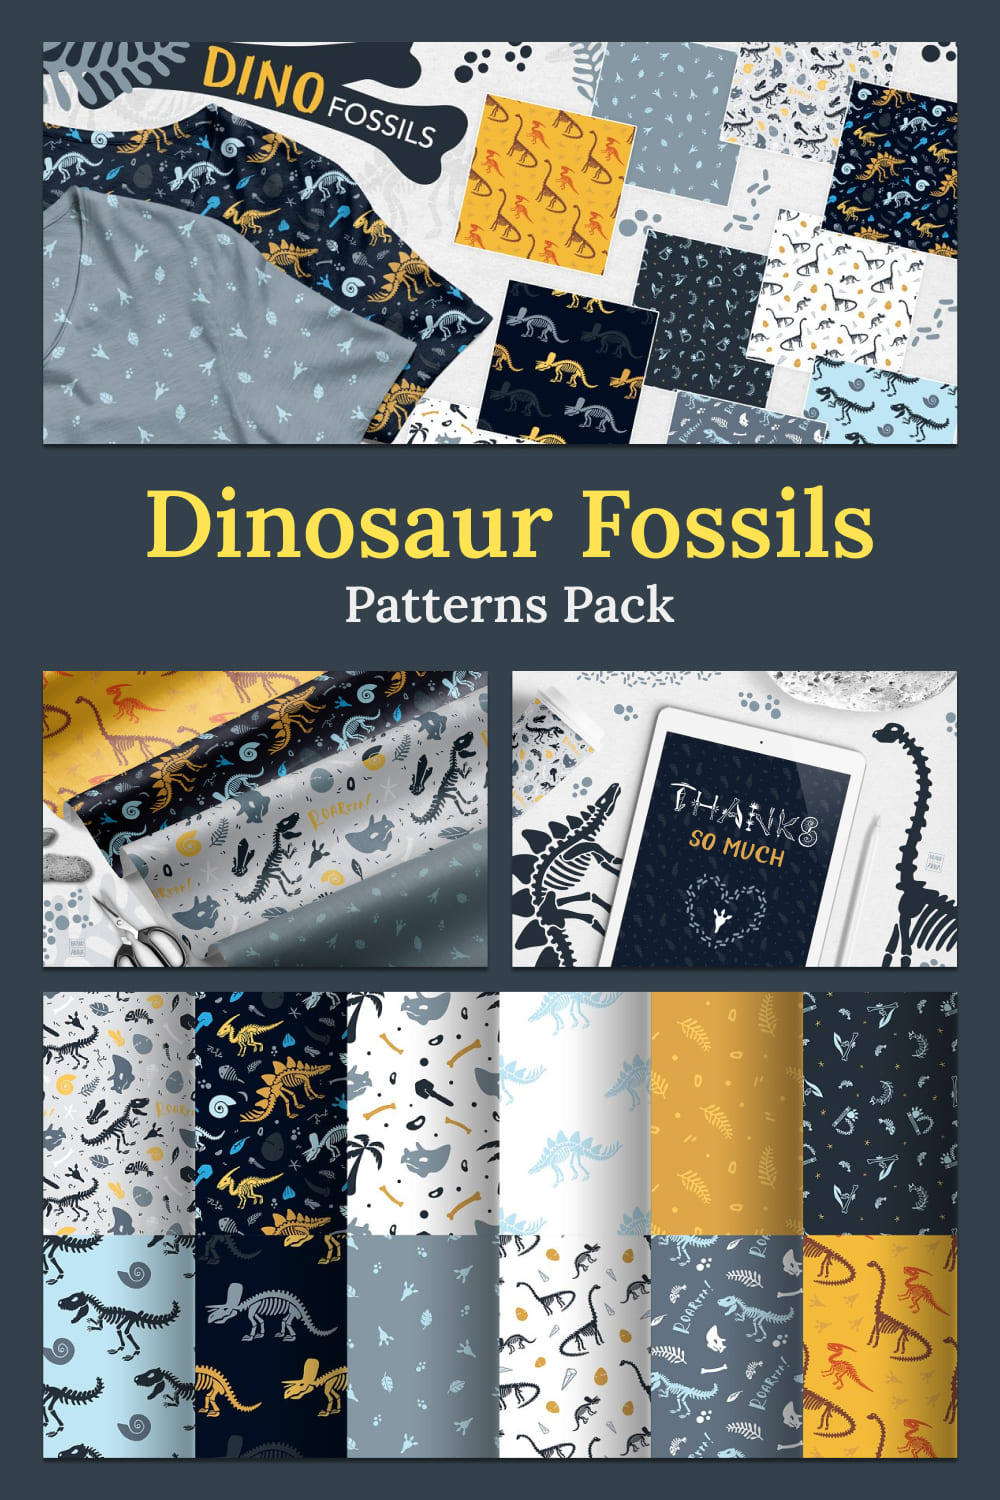 Dinosaur Fossils Patterns Pack pinterest image.